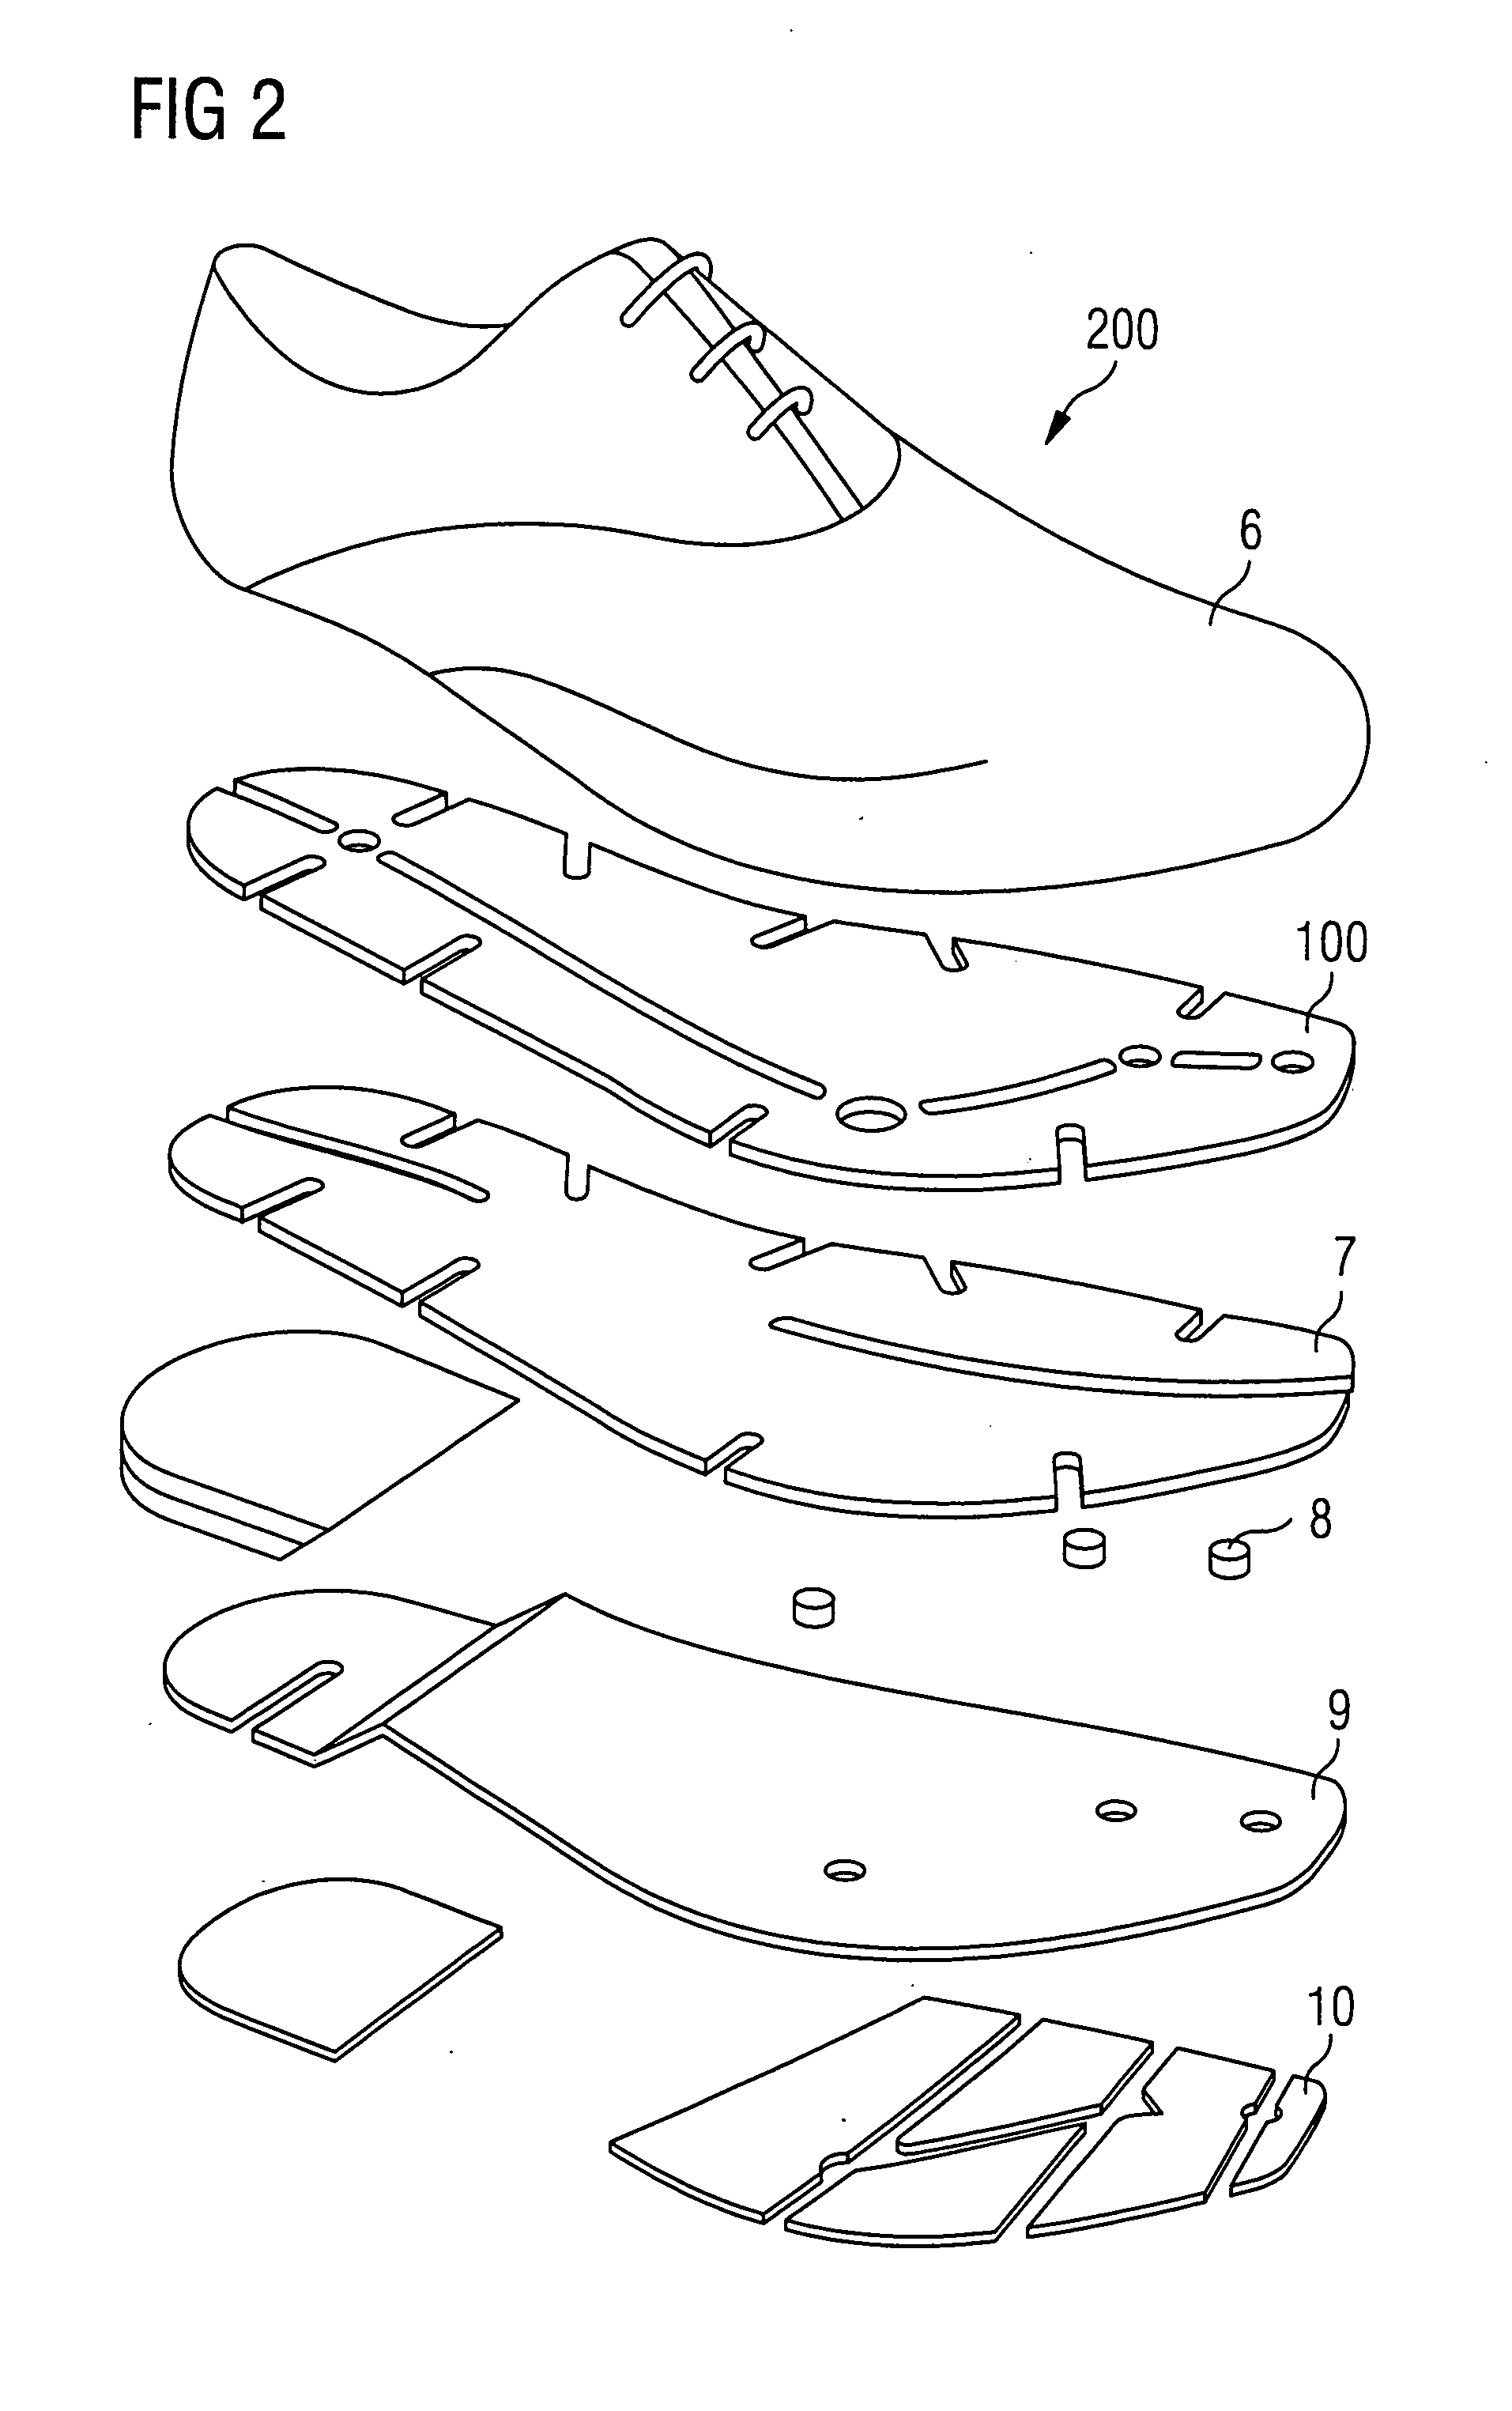 Kinematic Shoe Sole and Shoe Having Kinematic Shoe Sole